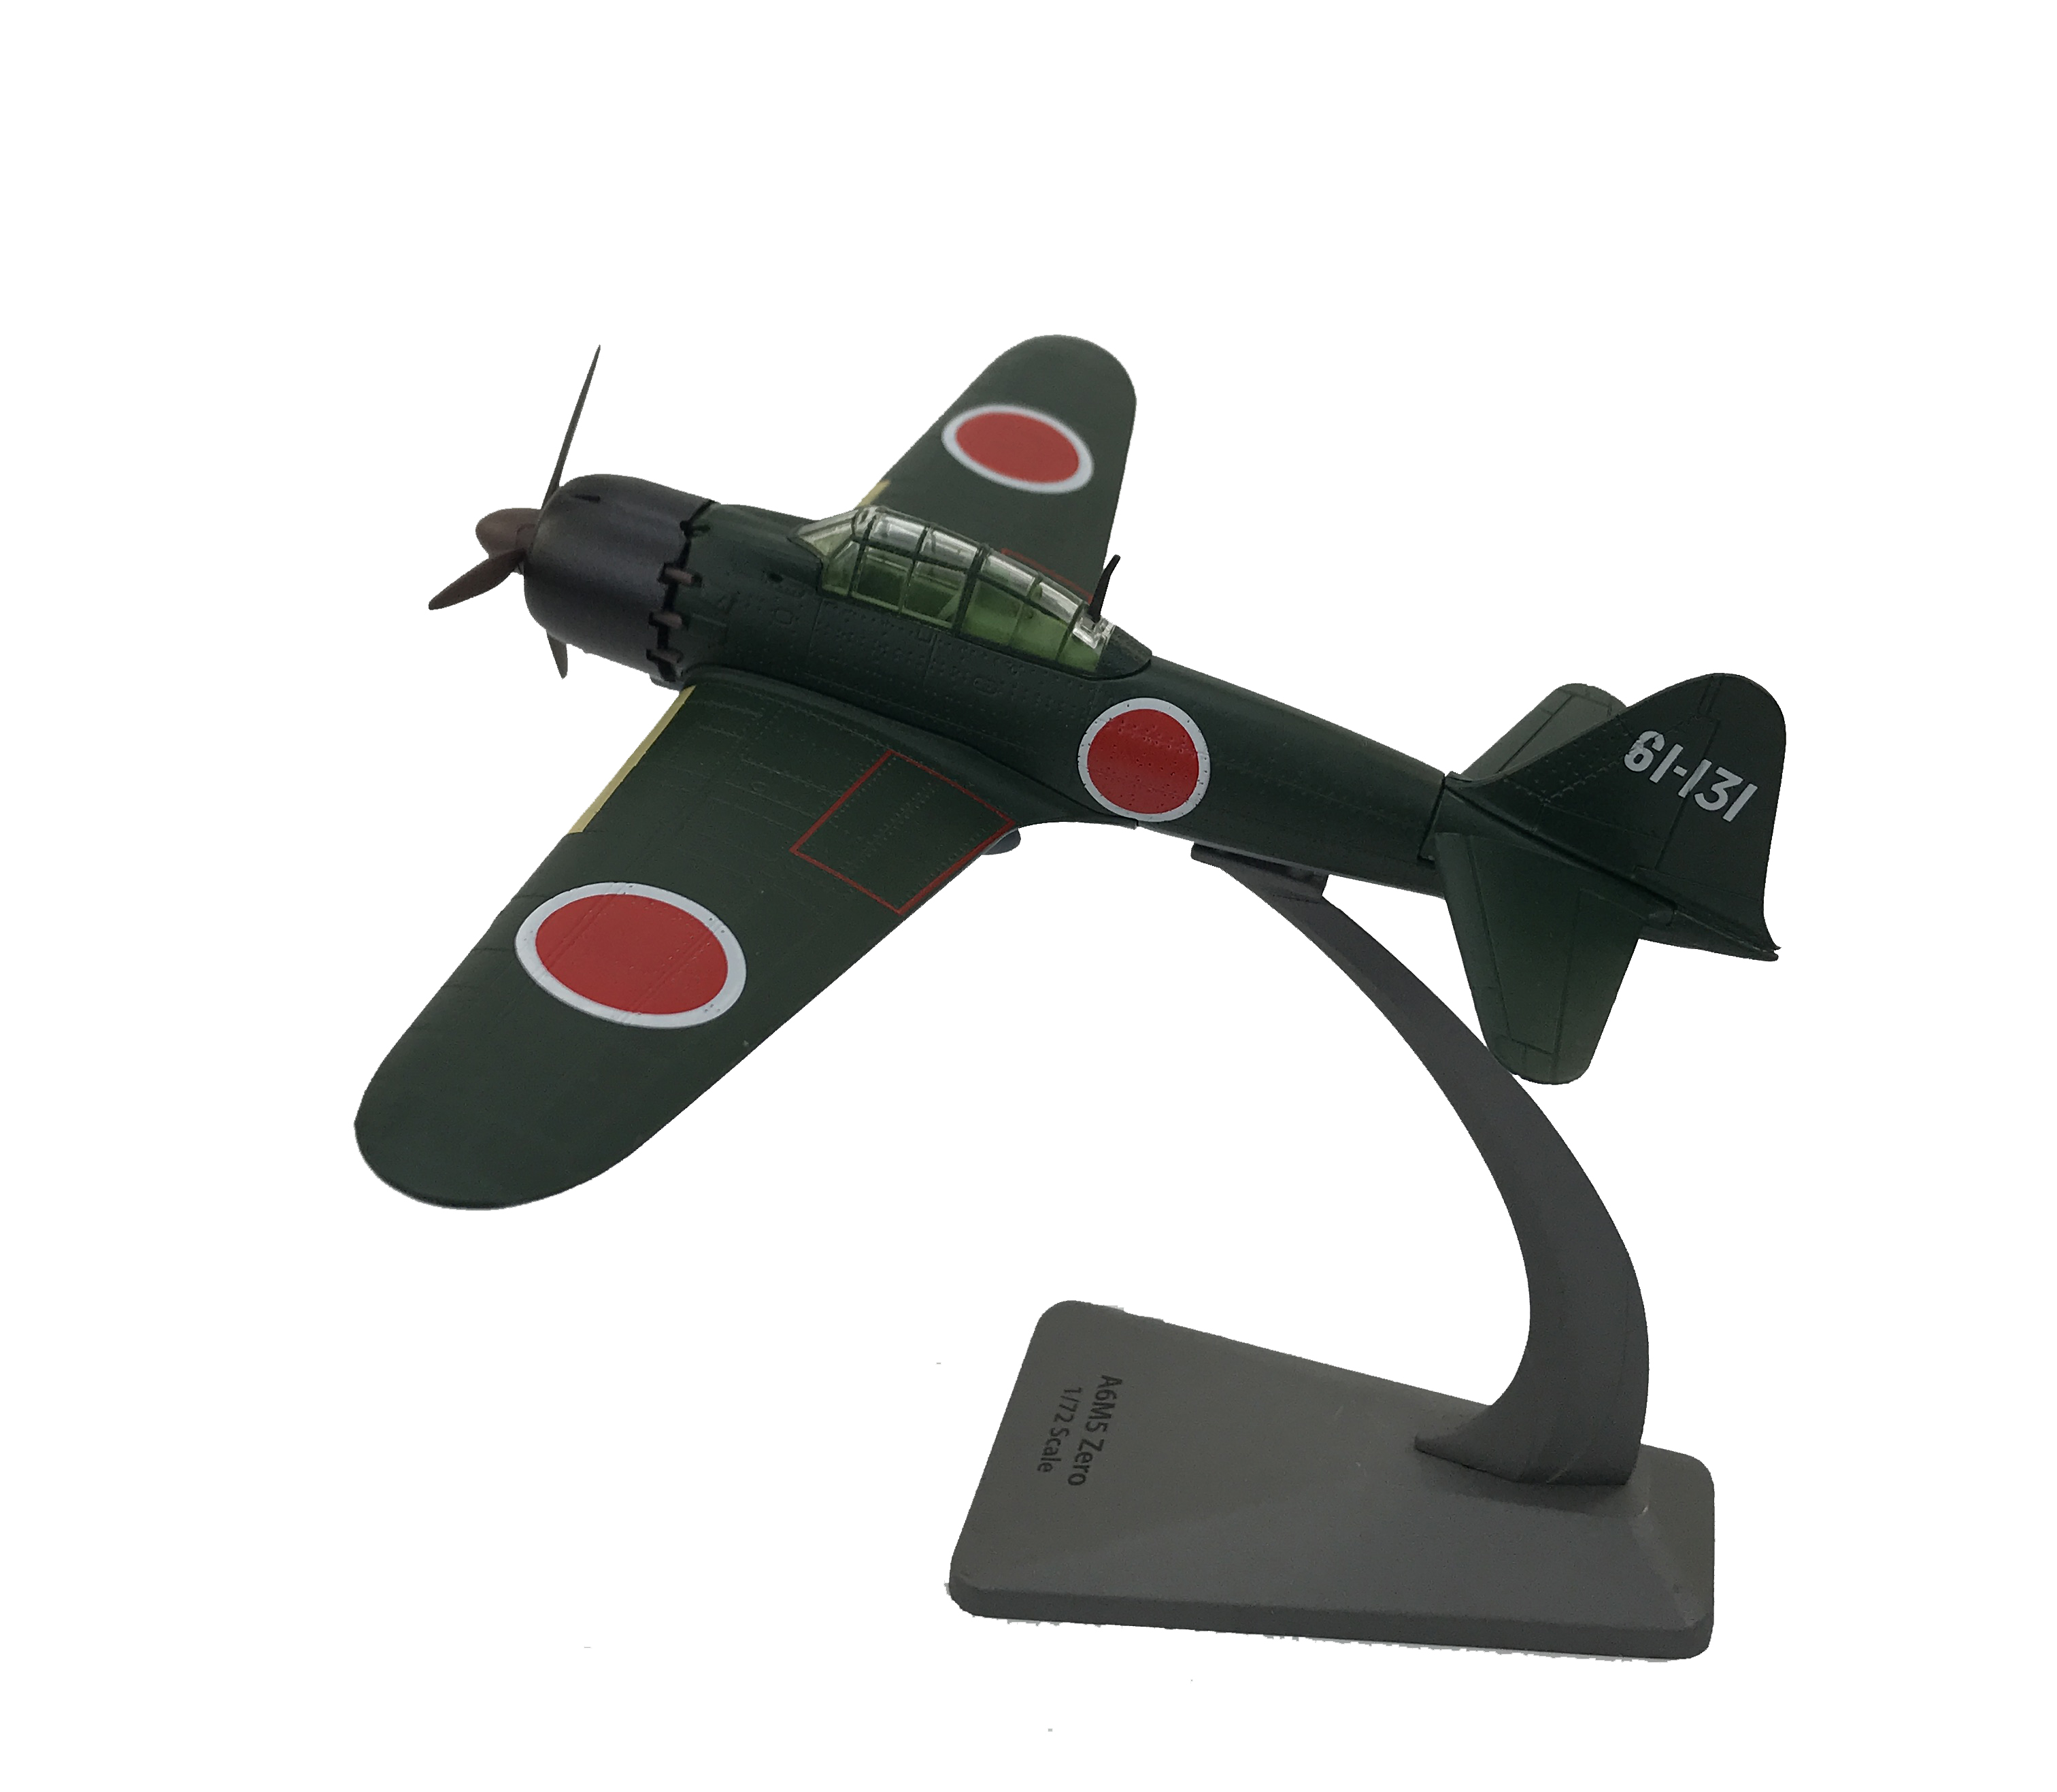 RV MODEL 제 2 차 세계 대전 유명한 전투기 Spitfire Japan Zero War 합금 비행기 모형 1/72